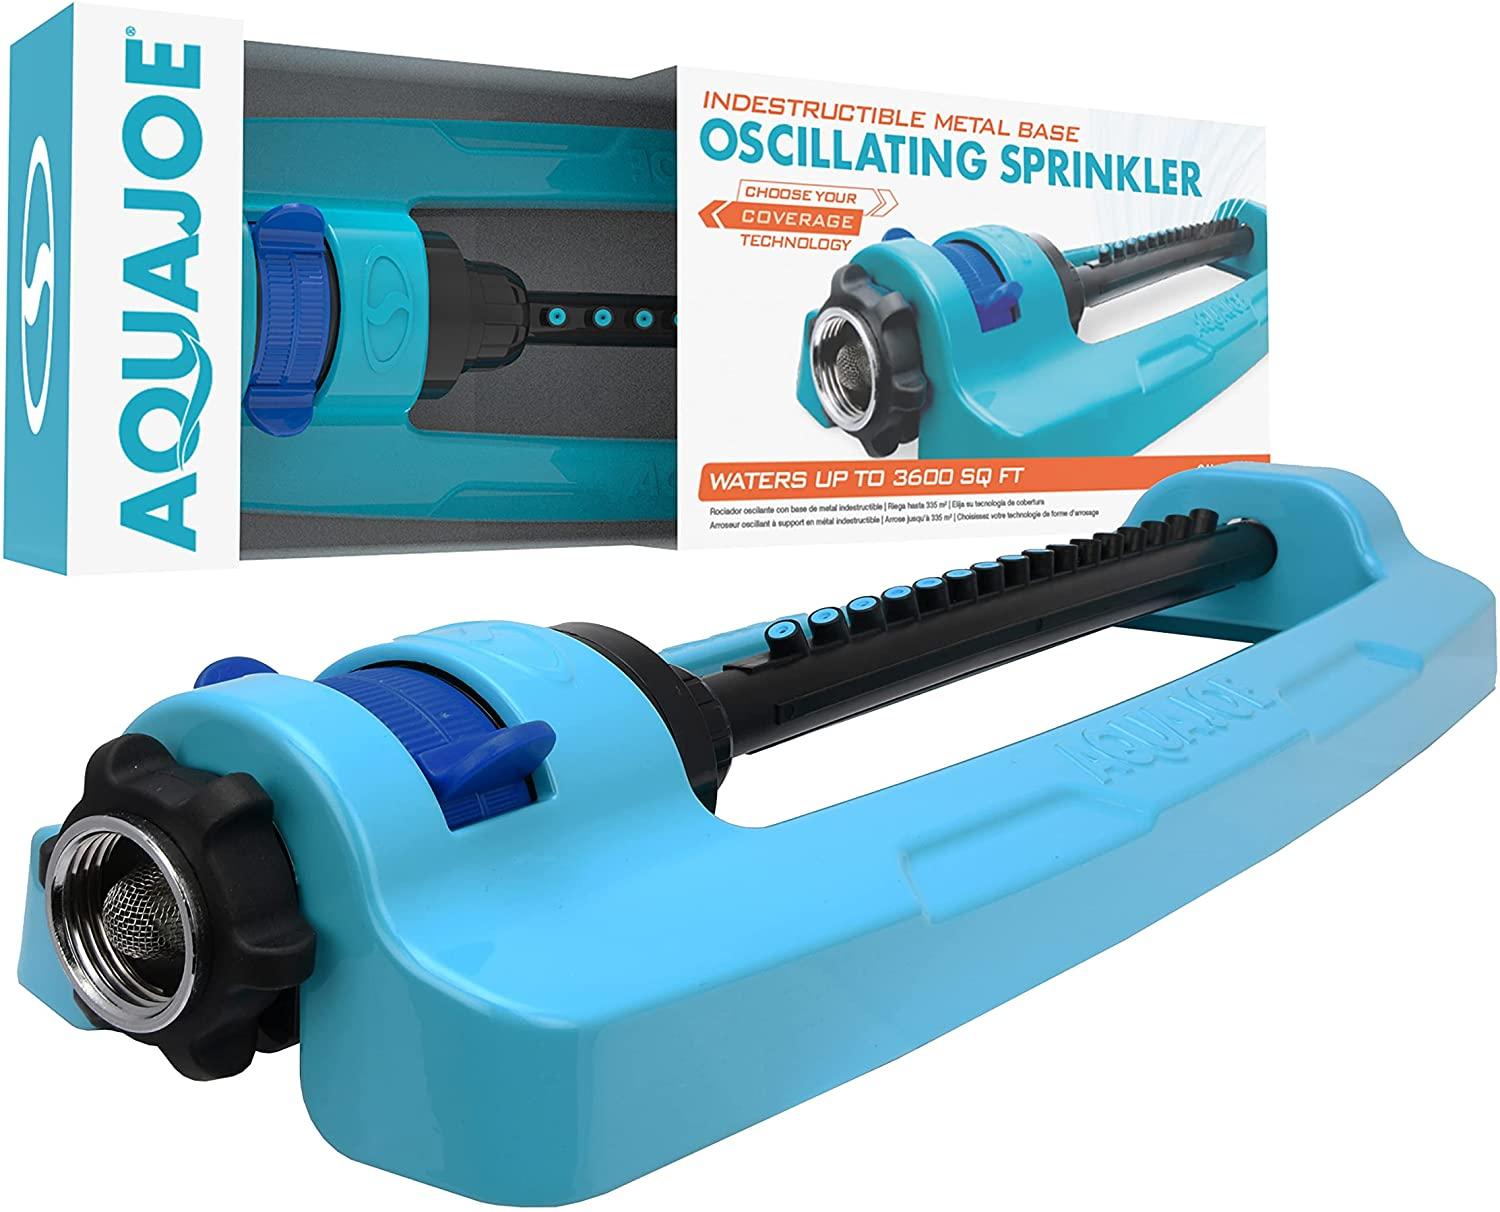 Aqua Joe 16in Metal Base Oscillating Sprinkler for $8.40